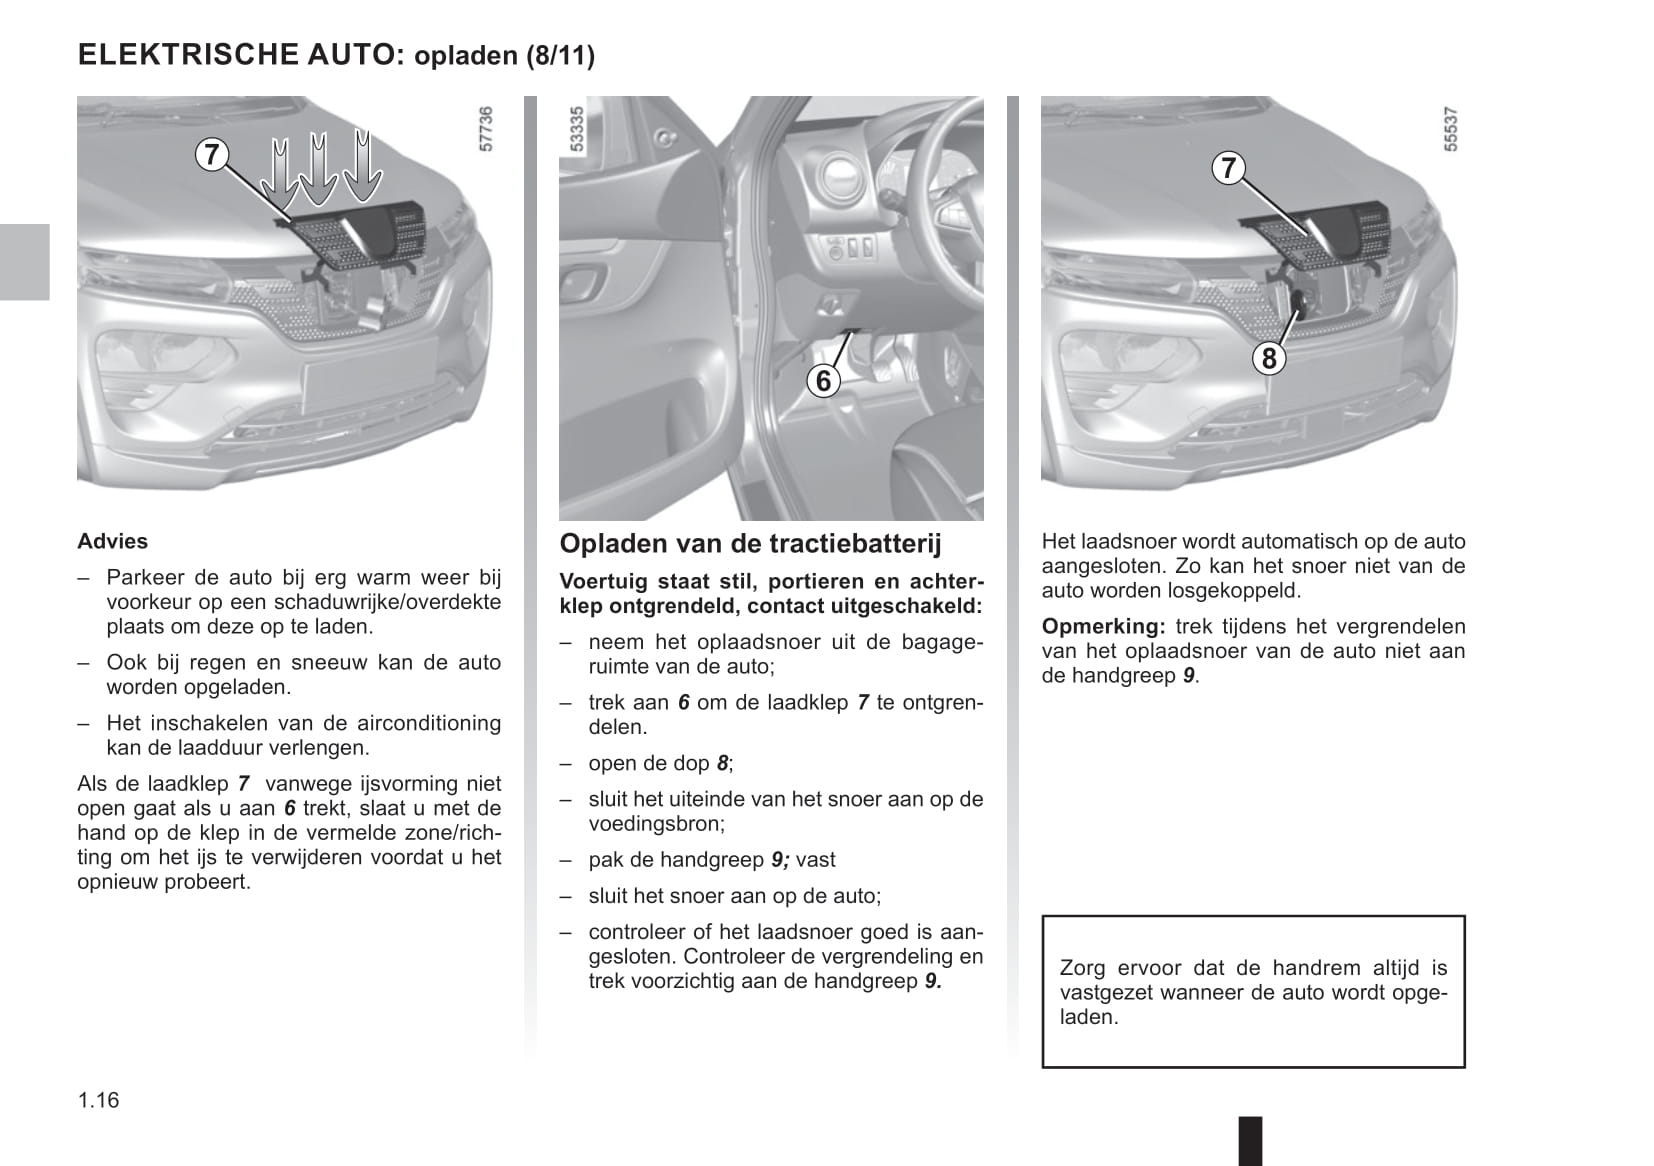 Manuel / notice d'utilisation - Dacia SPRING (Français)